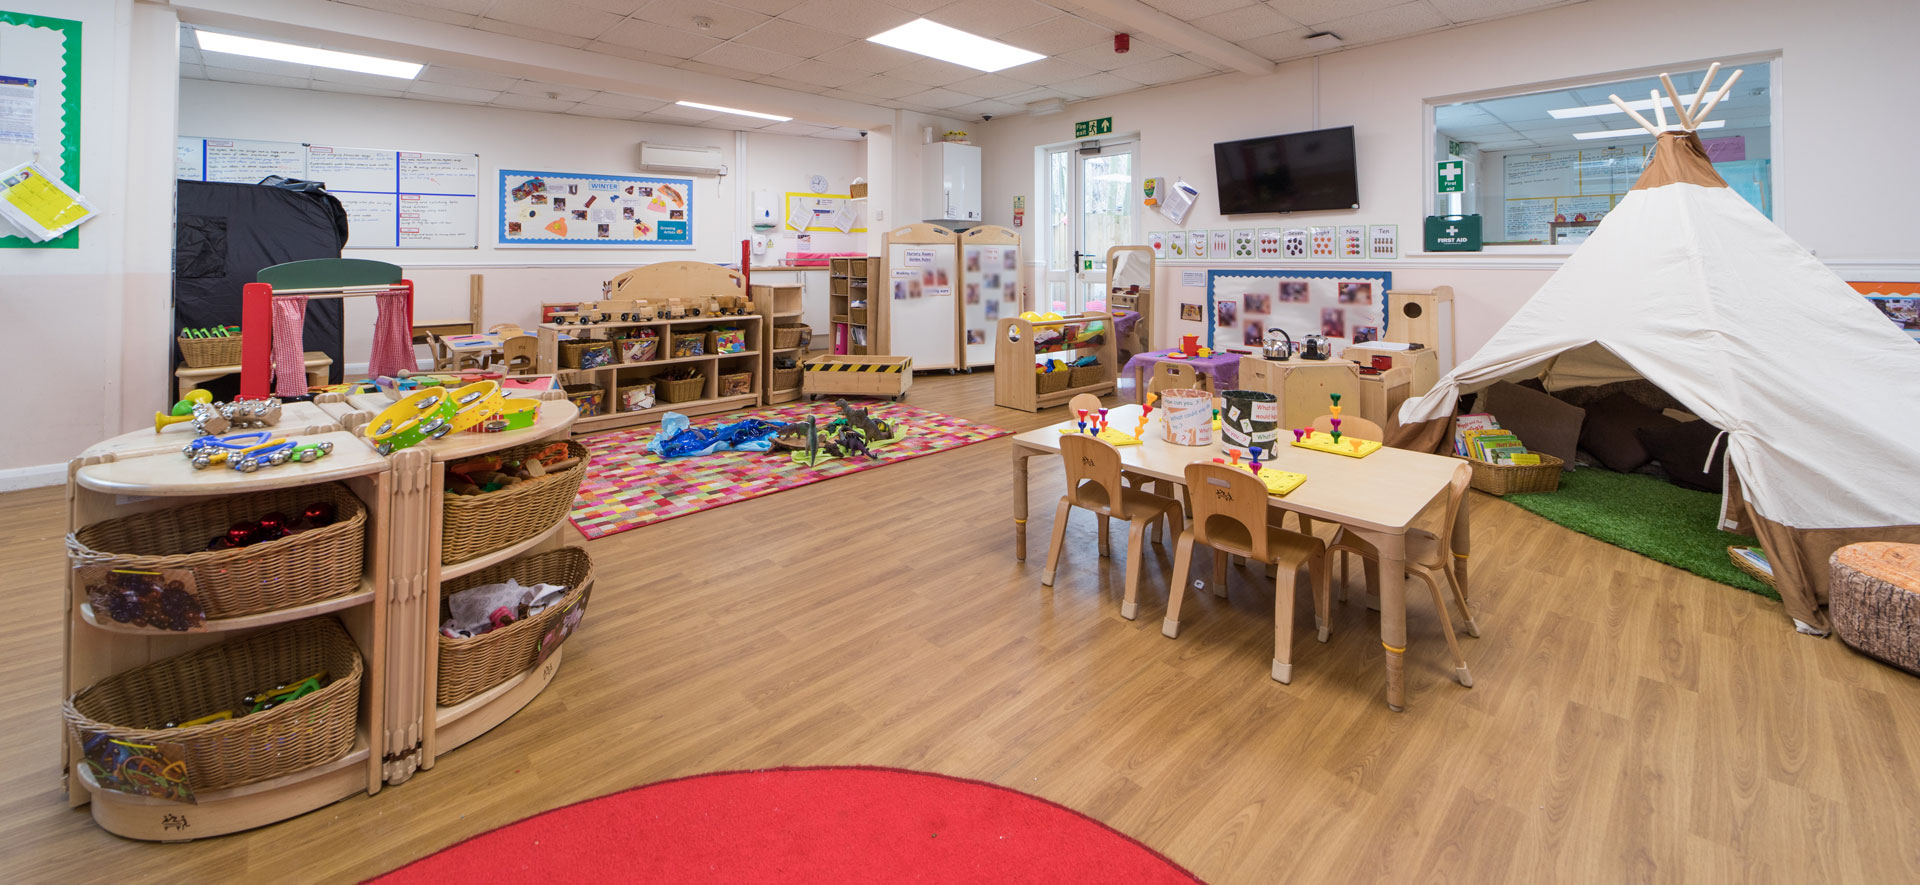 Putney Day Nursery and Preschool